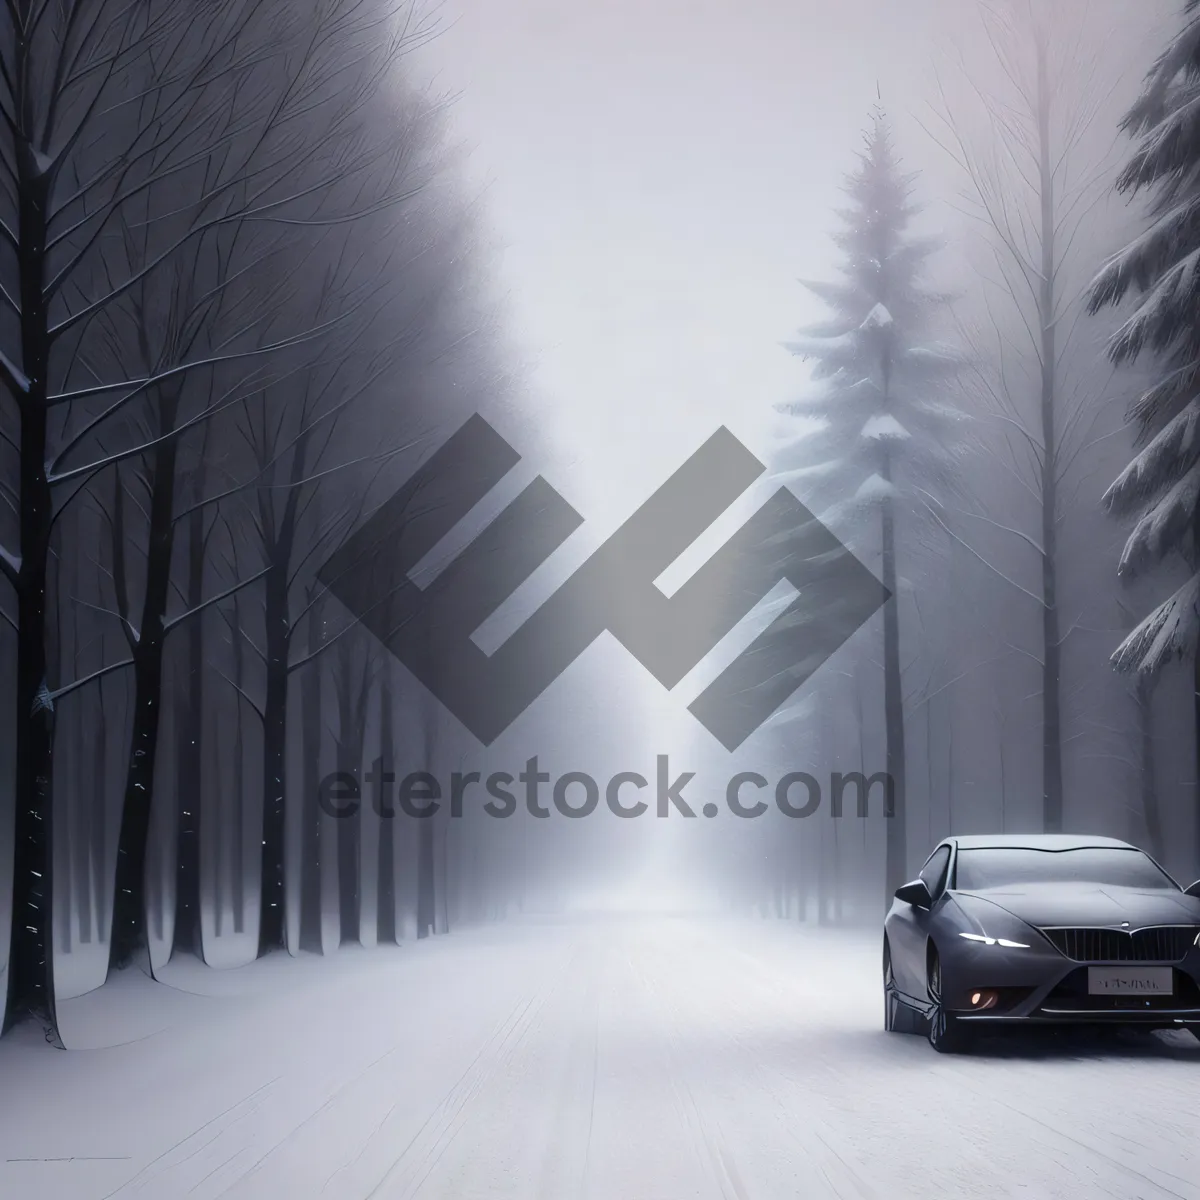 Picture of Frosty Winter Wonderland: Snowy Trees along Frozen Road